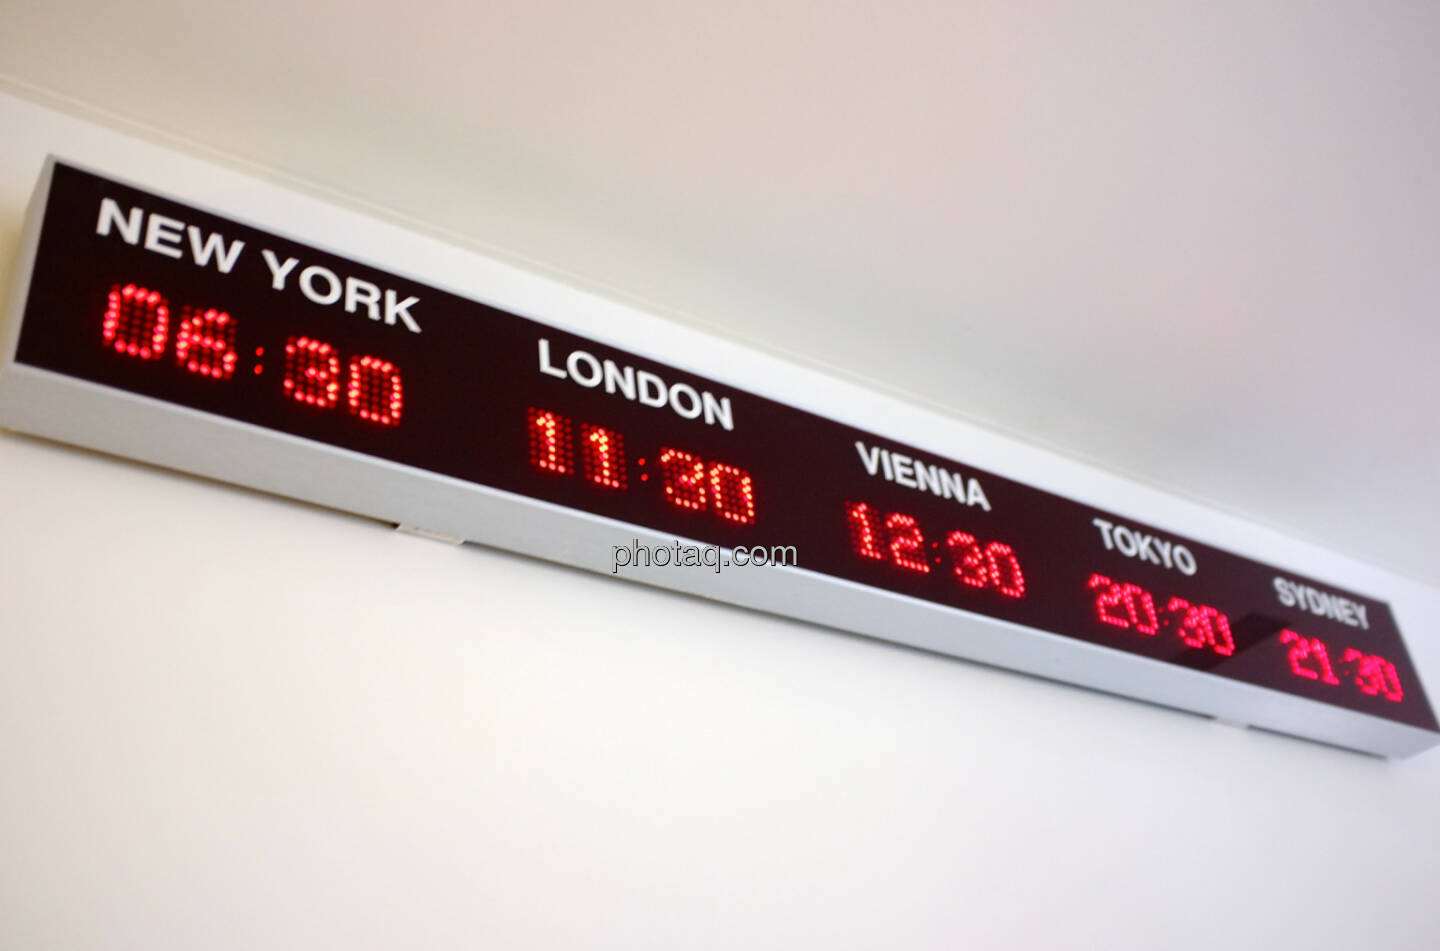 Uhren, Börsetime: New York, London, Vienna, Tokyo, Sydney